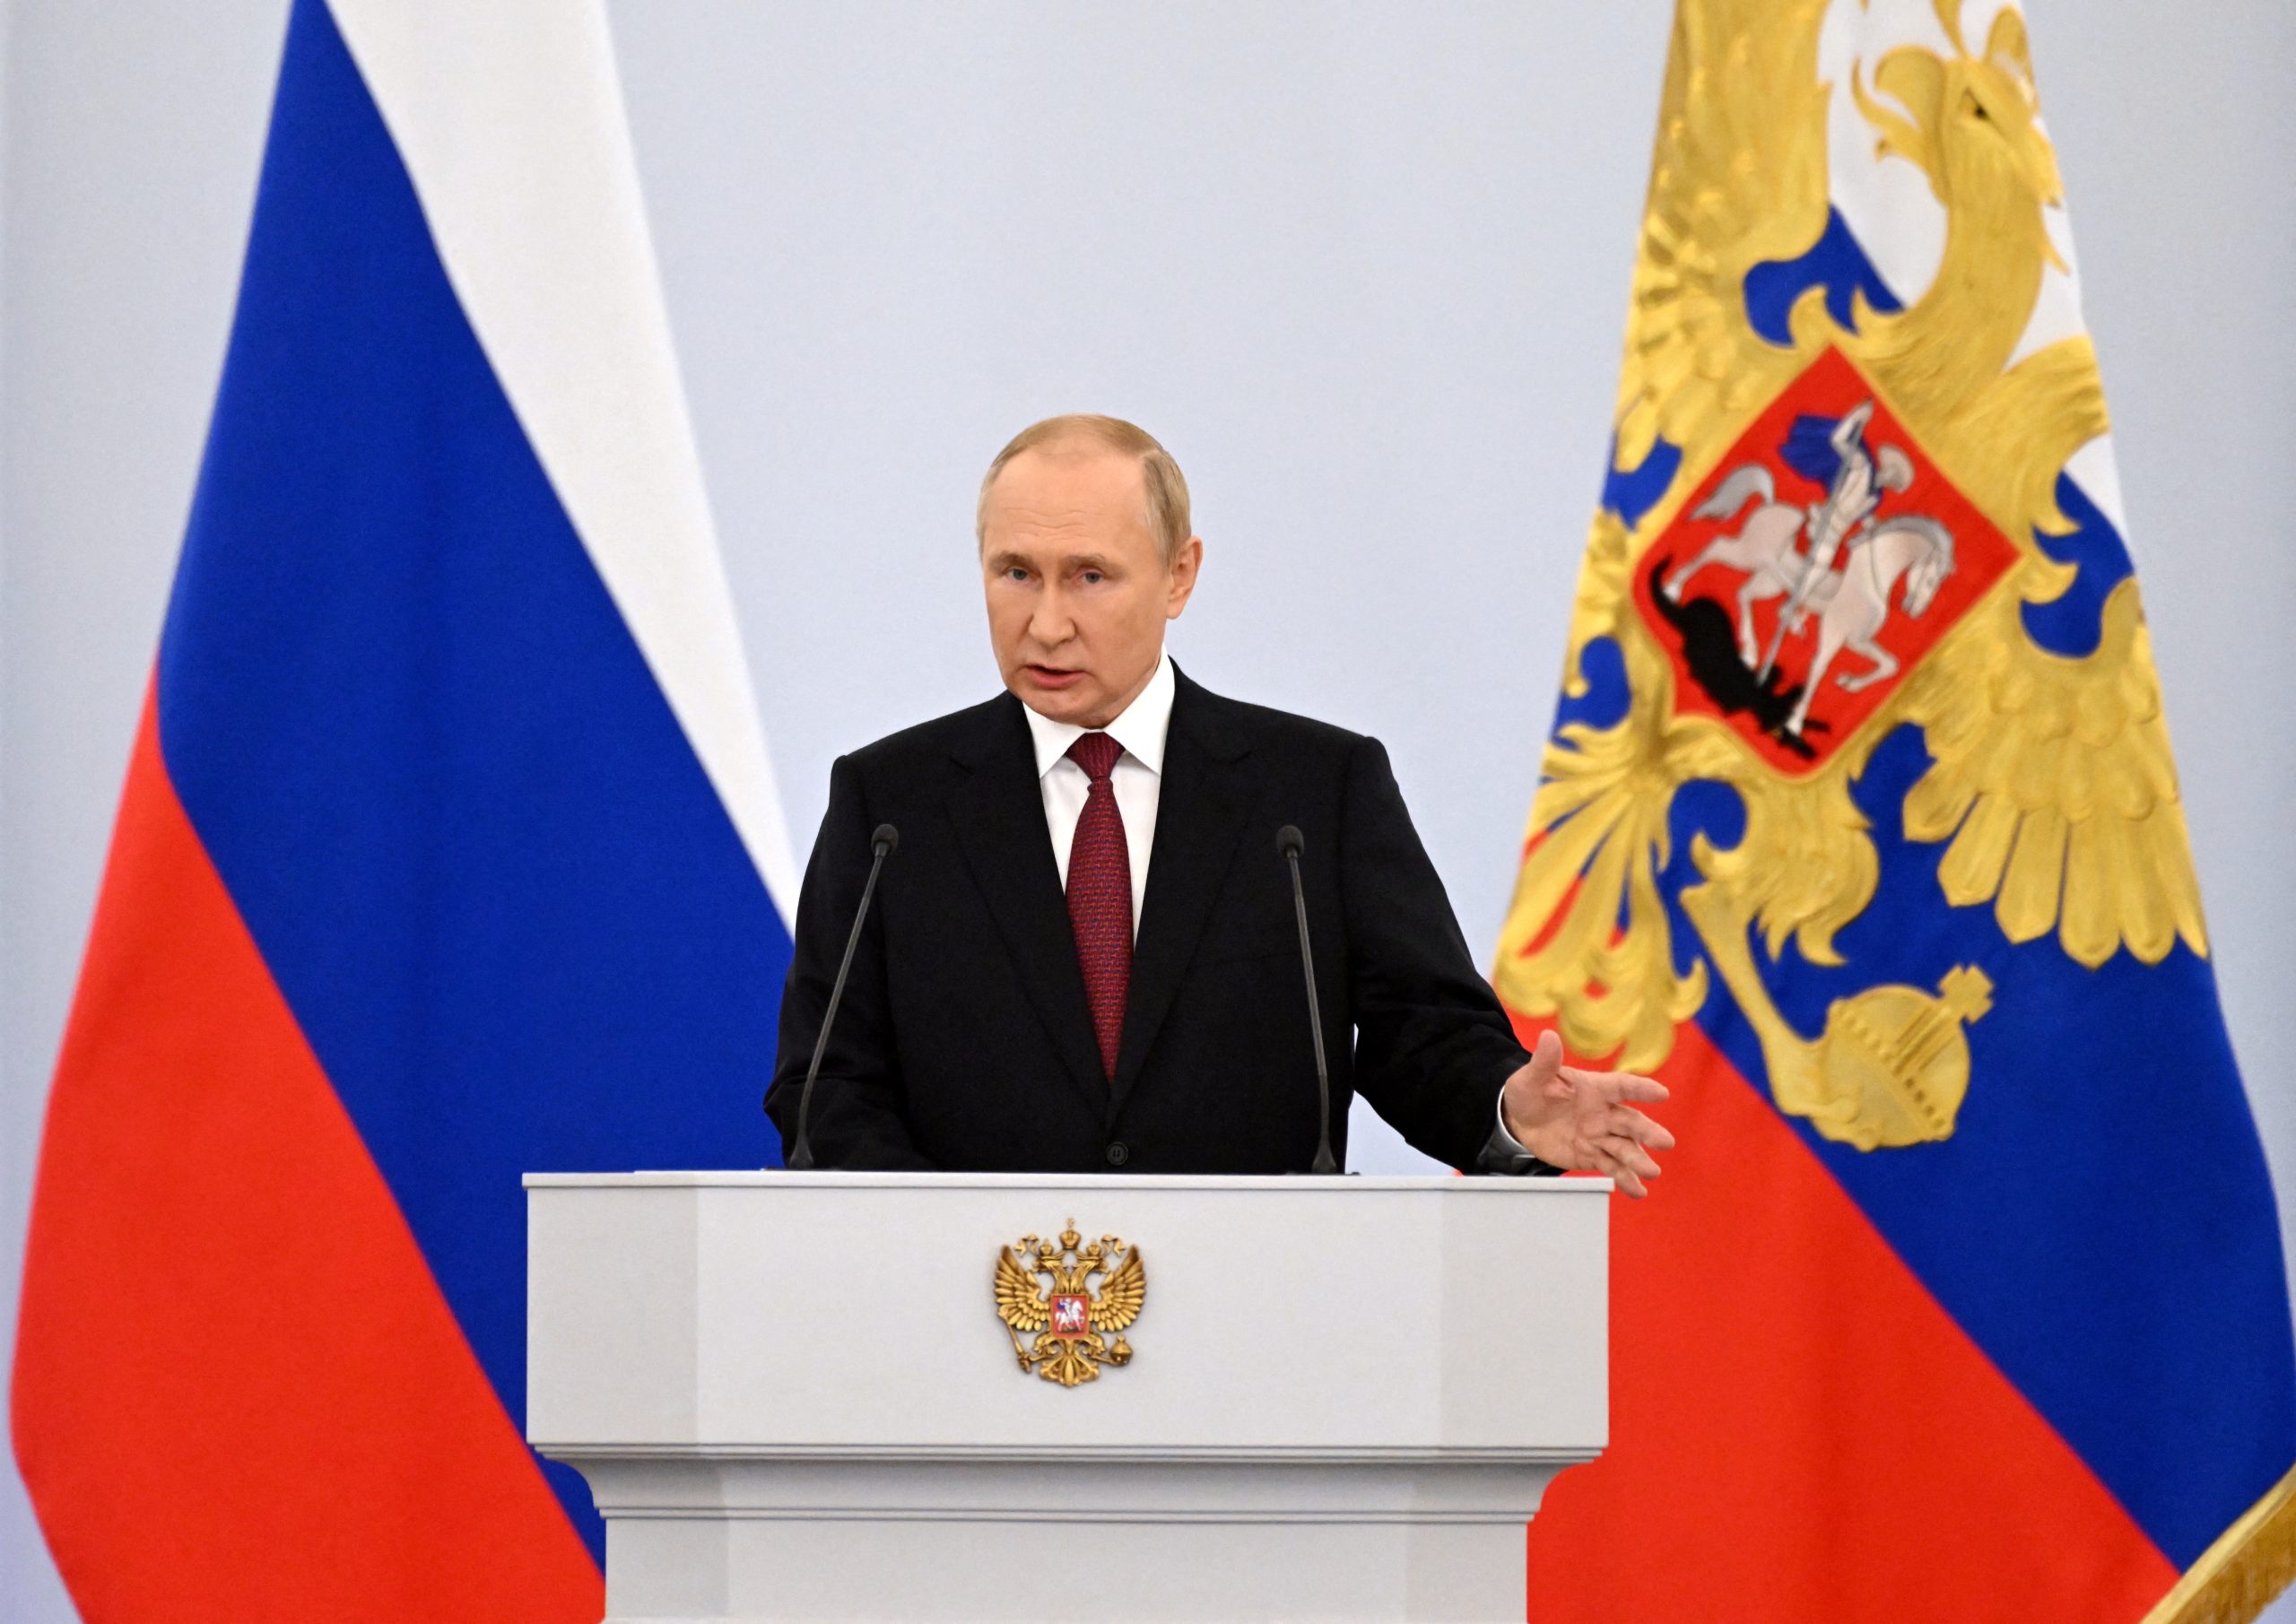 Russian War Report: Putin illegally annexes Ukrainian territory